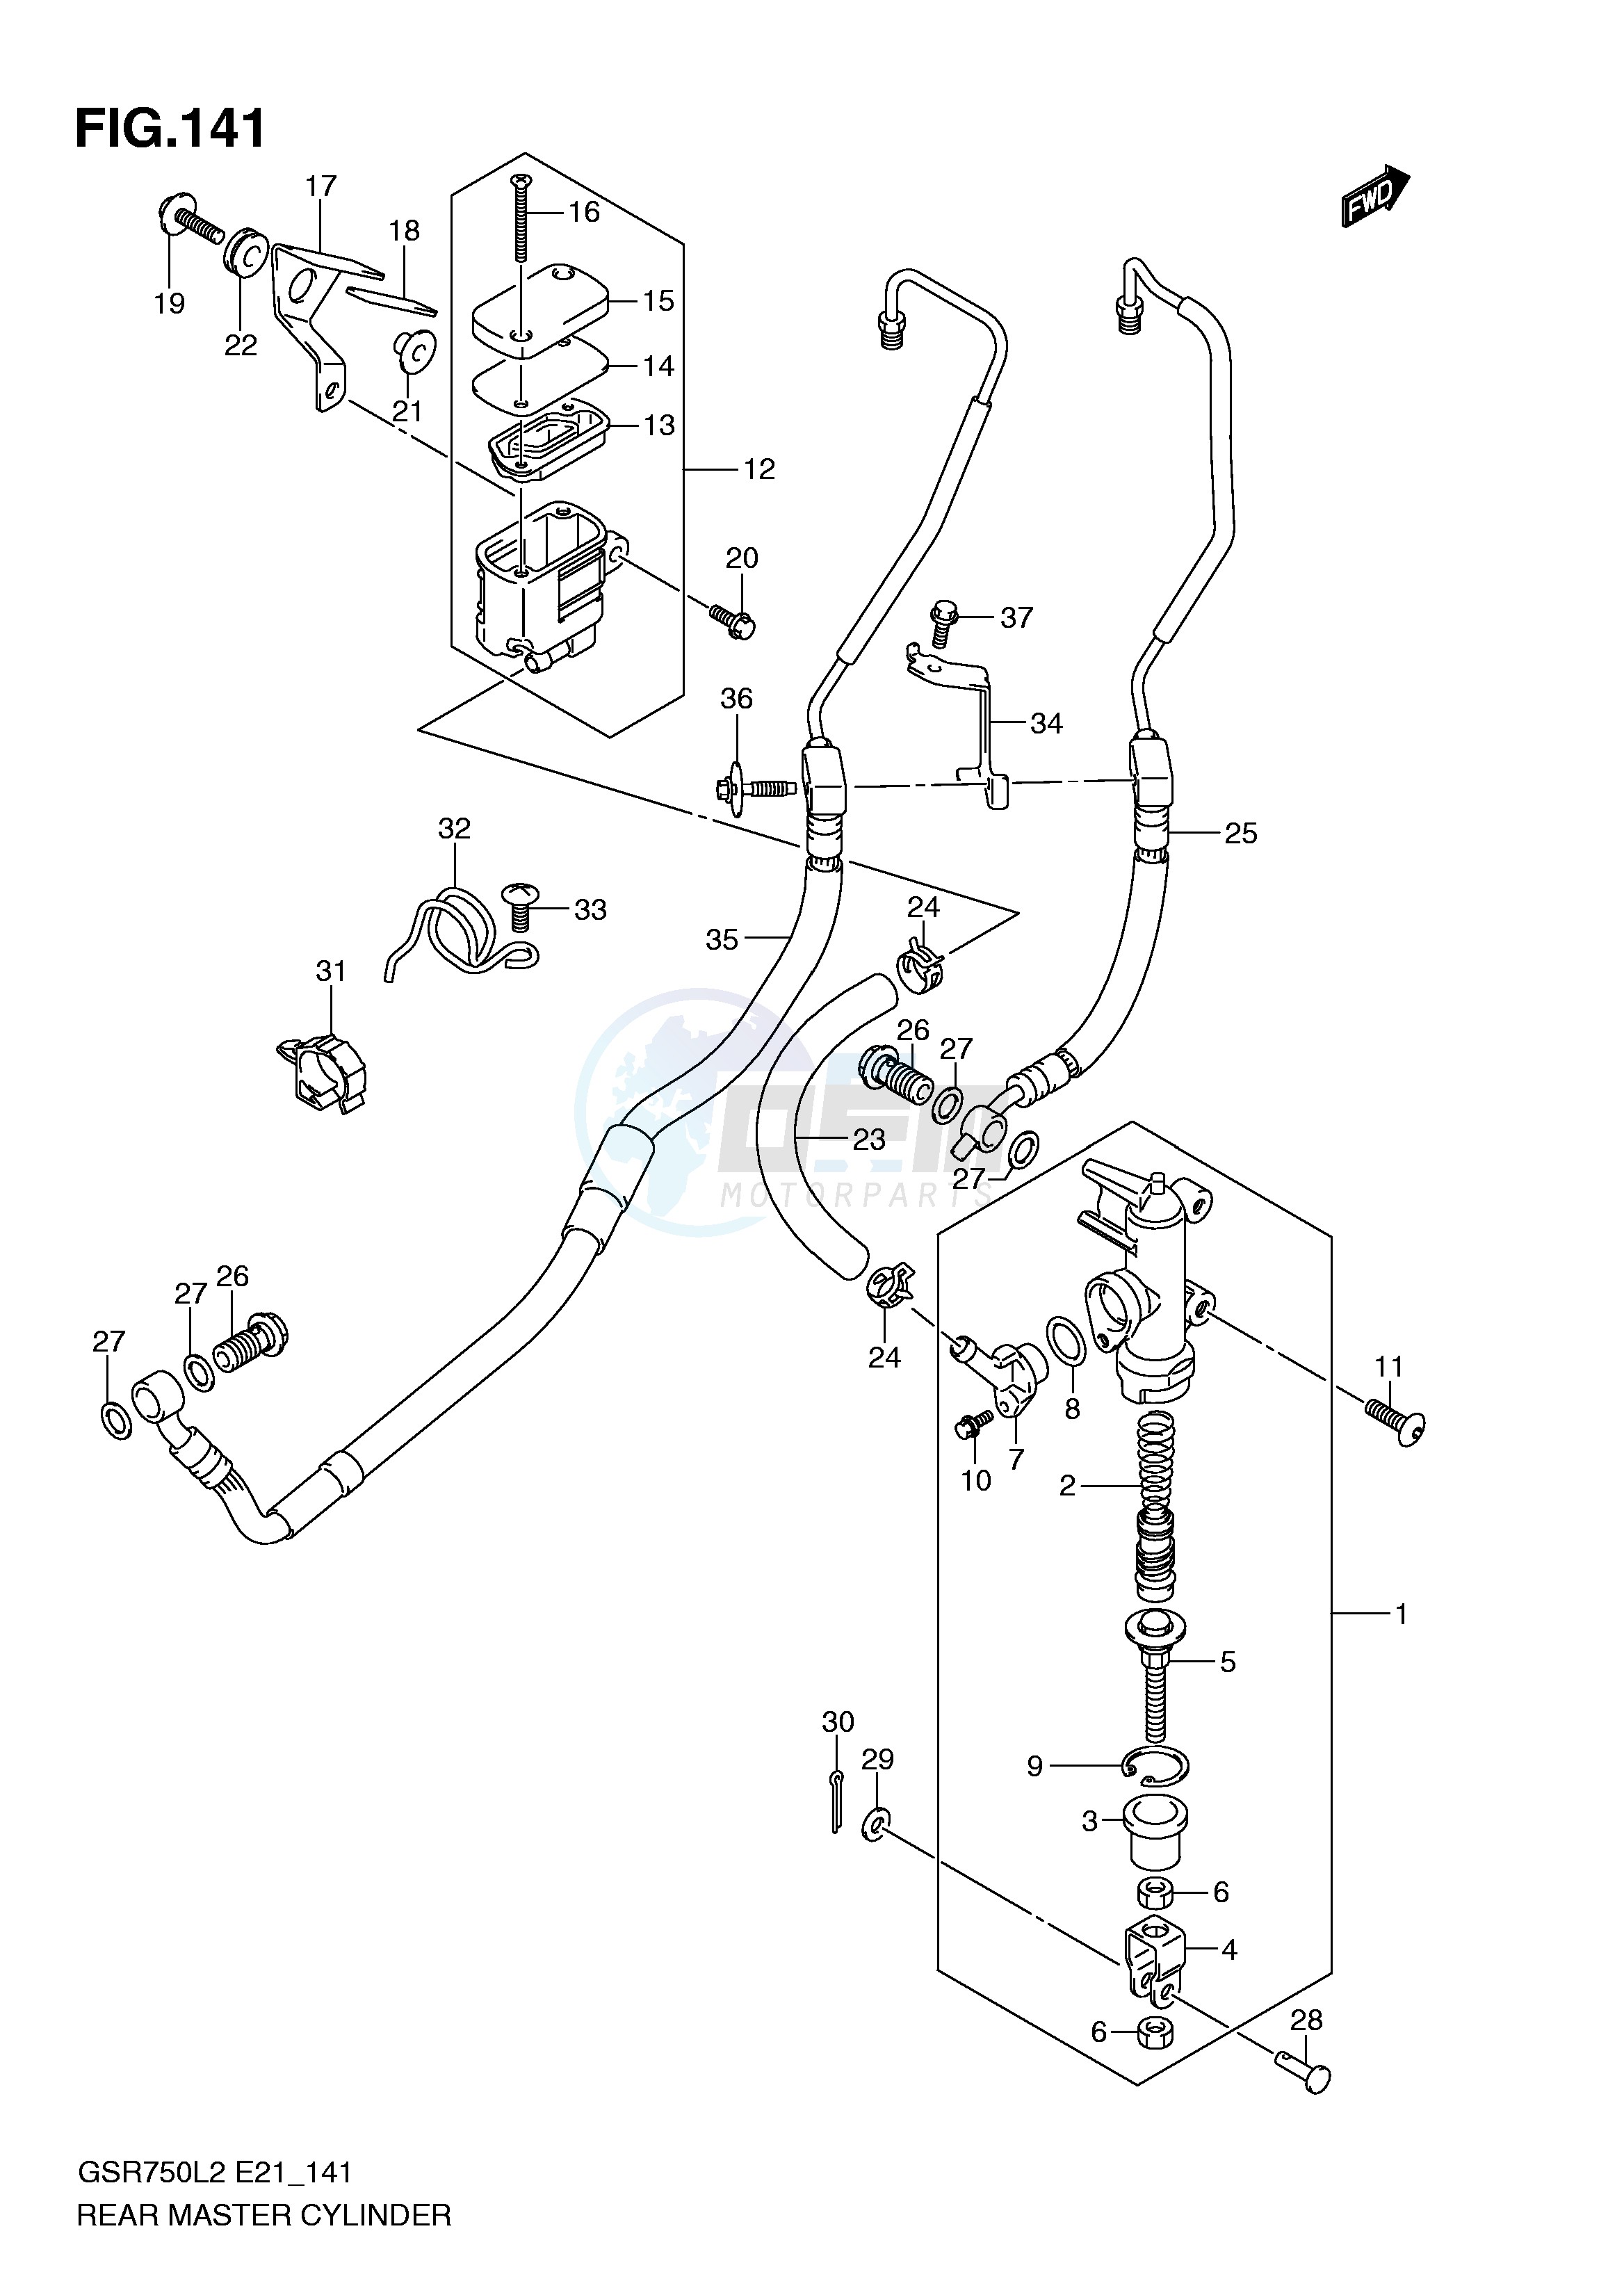 REAR MASTER CYLINDER (GSR750AL2 E21) blueprint